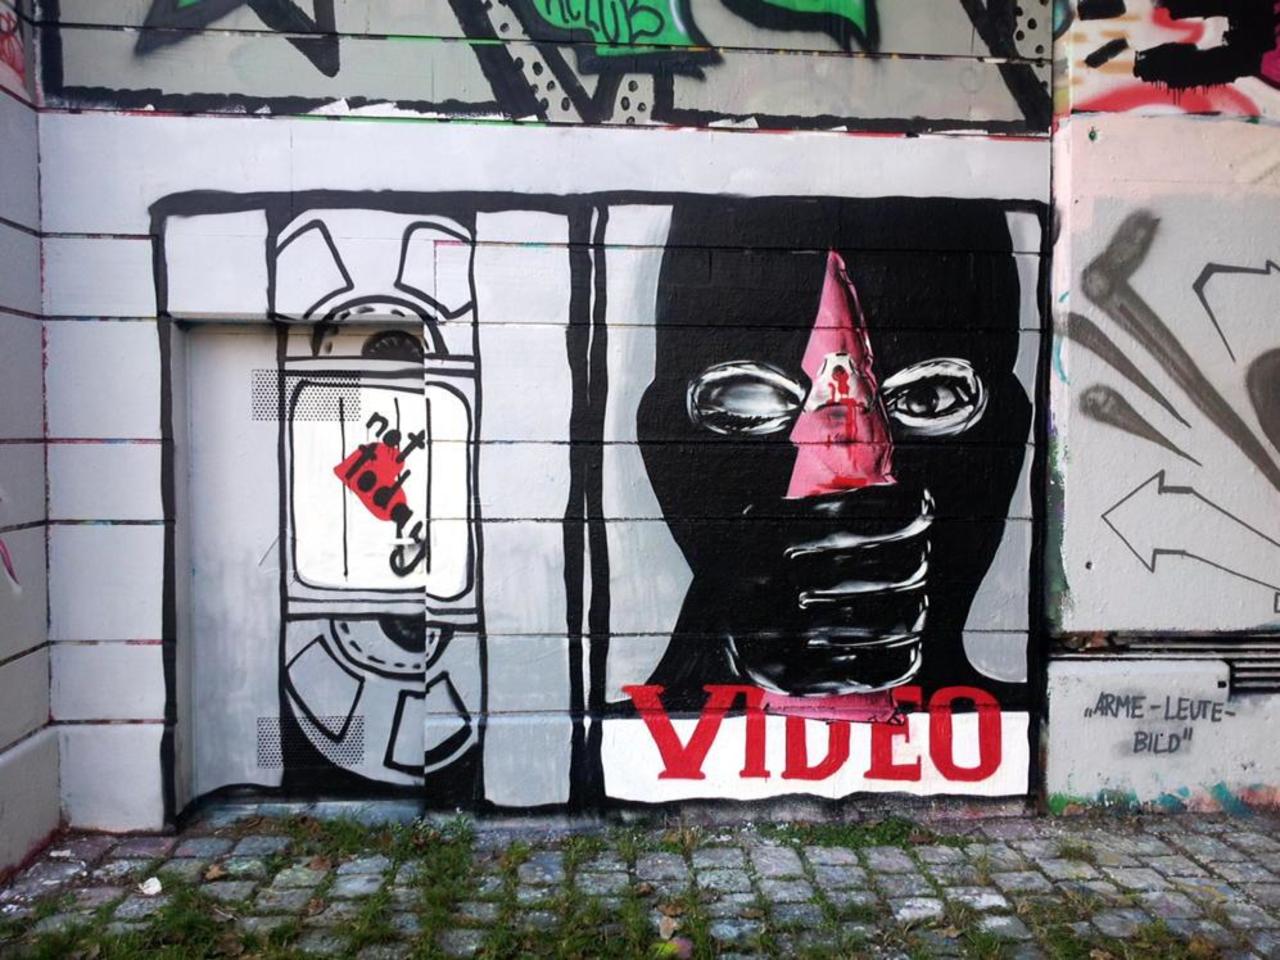 Good morning #graffiti lovers.
#streetart #vienna http://t.co/prk9c0piPF